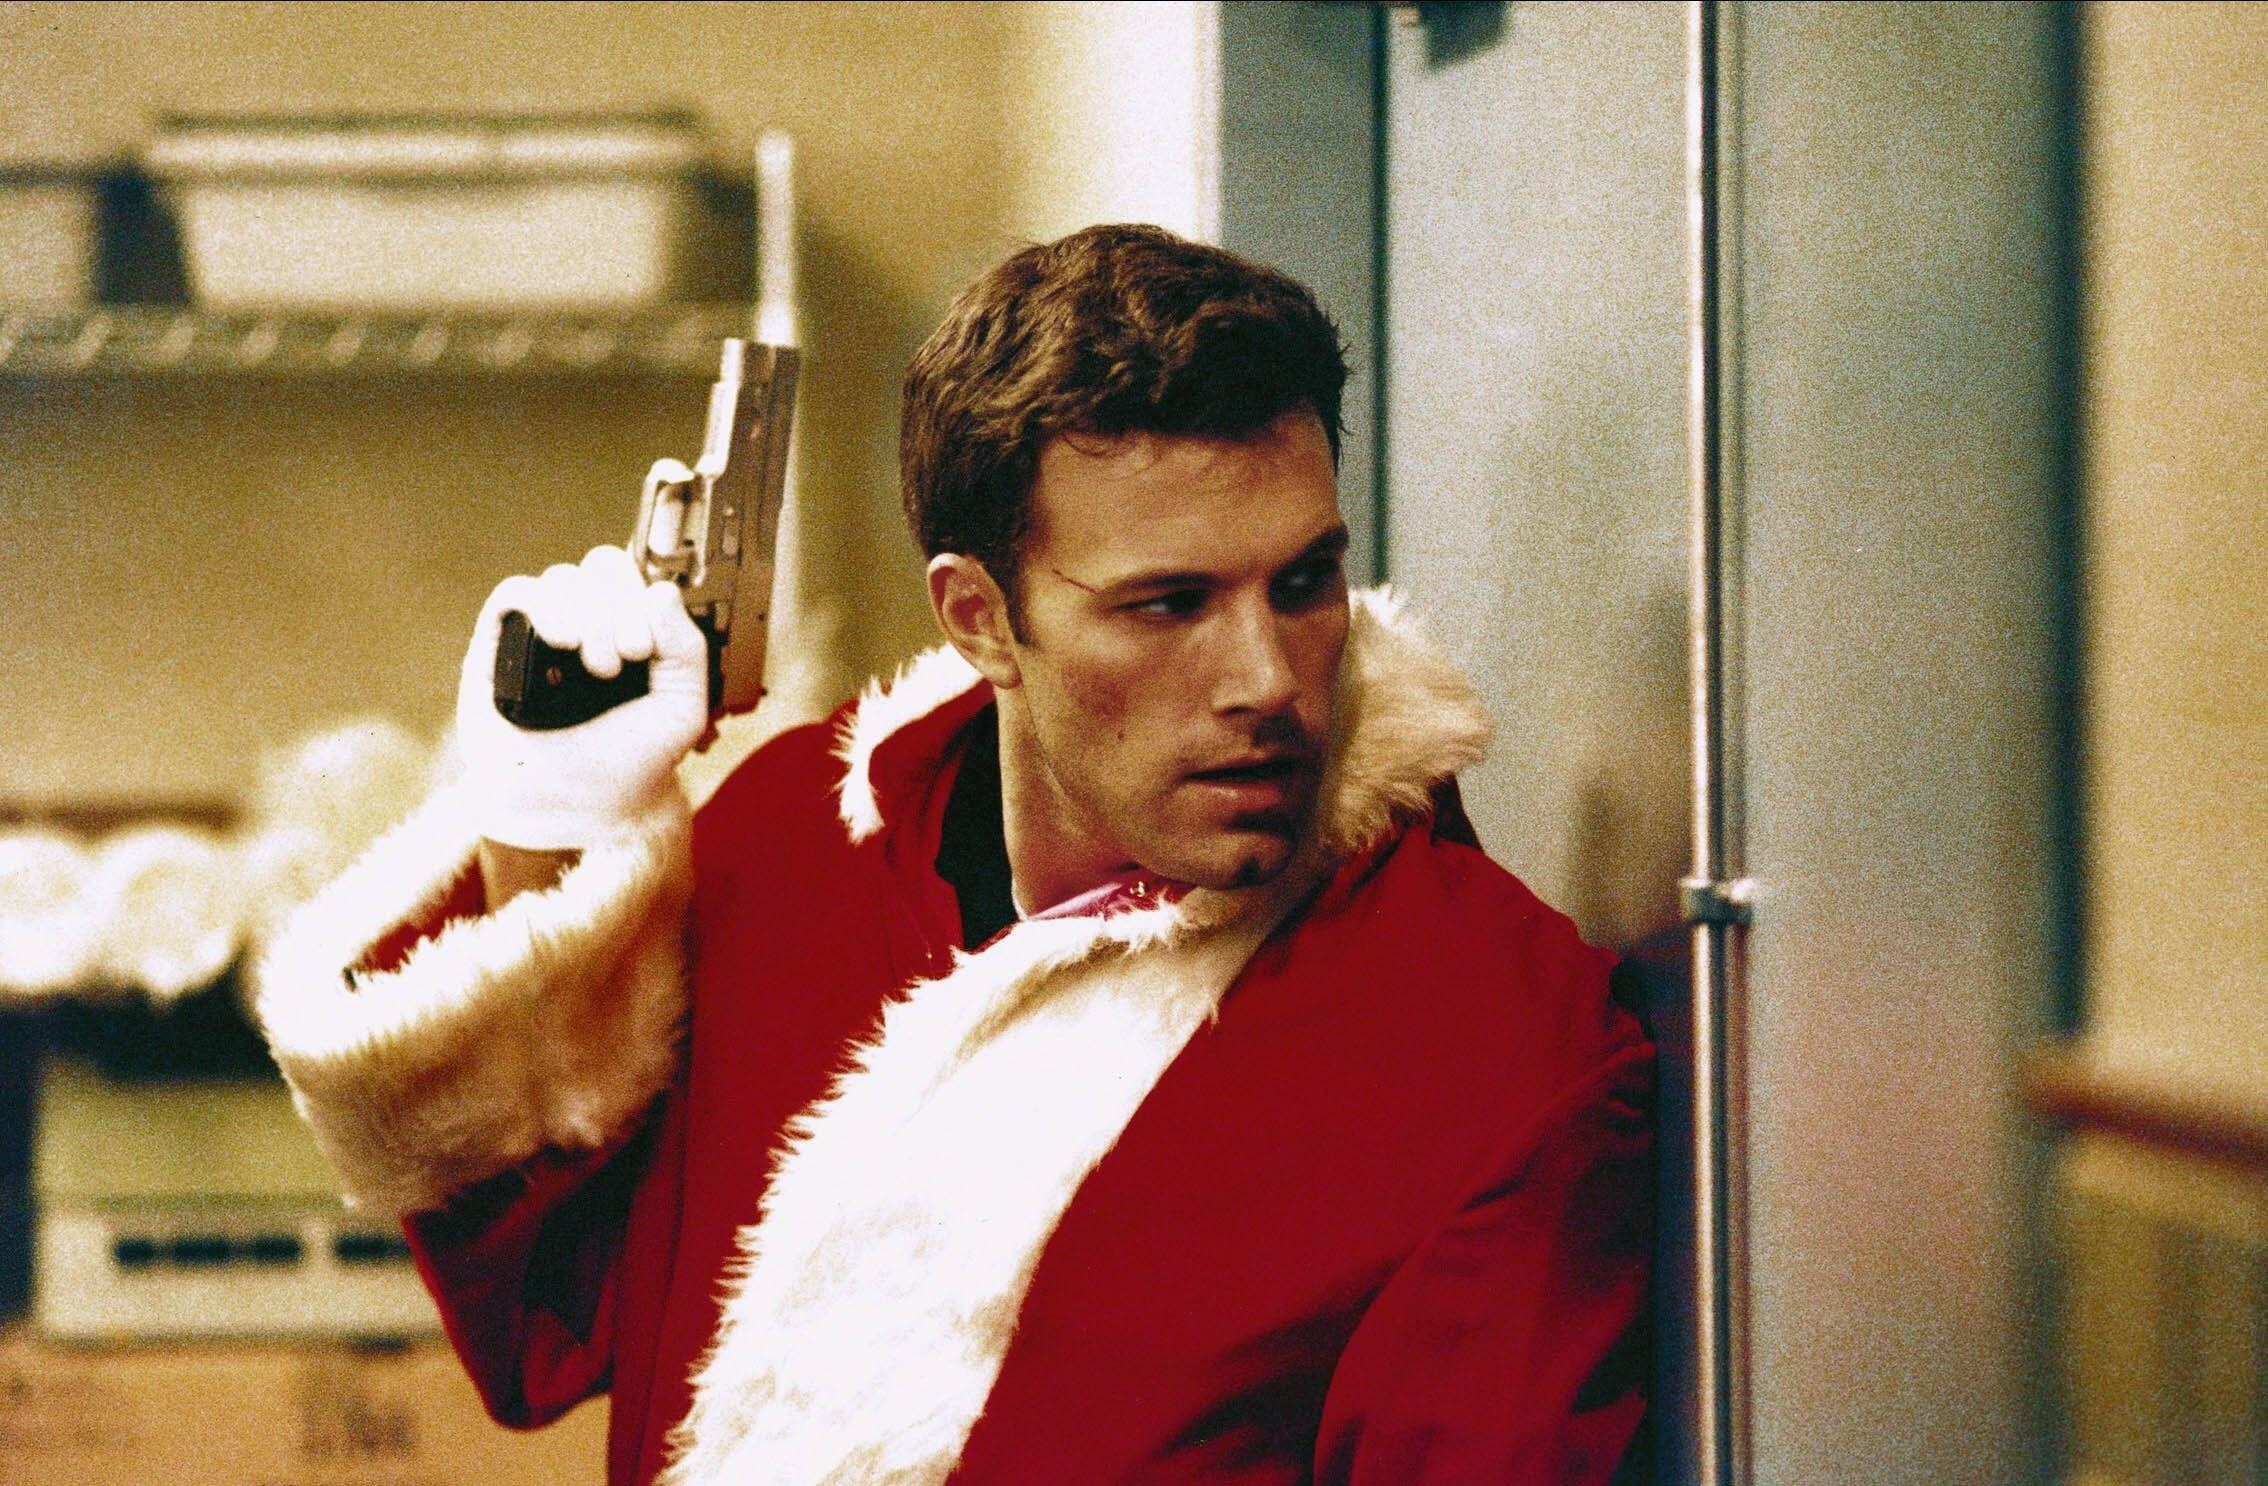 A gun-wielding man in a Santa costume hides from a threat behind a door